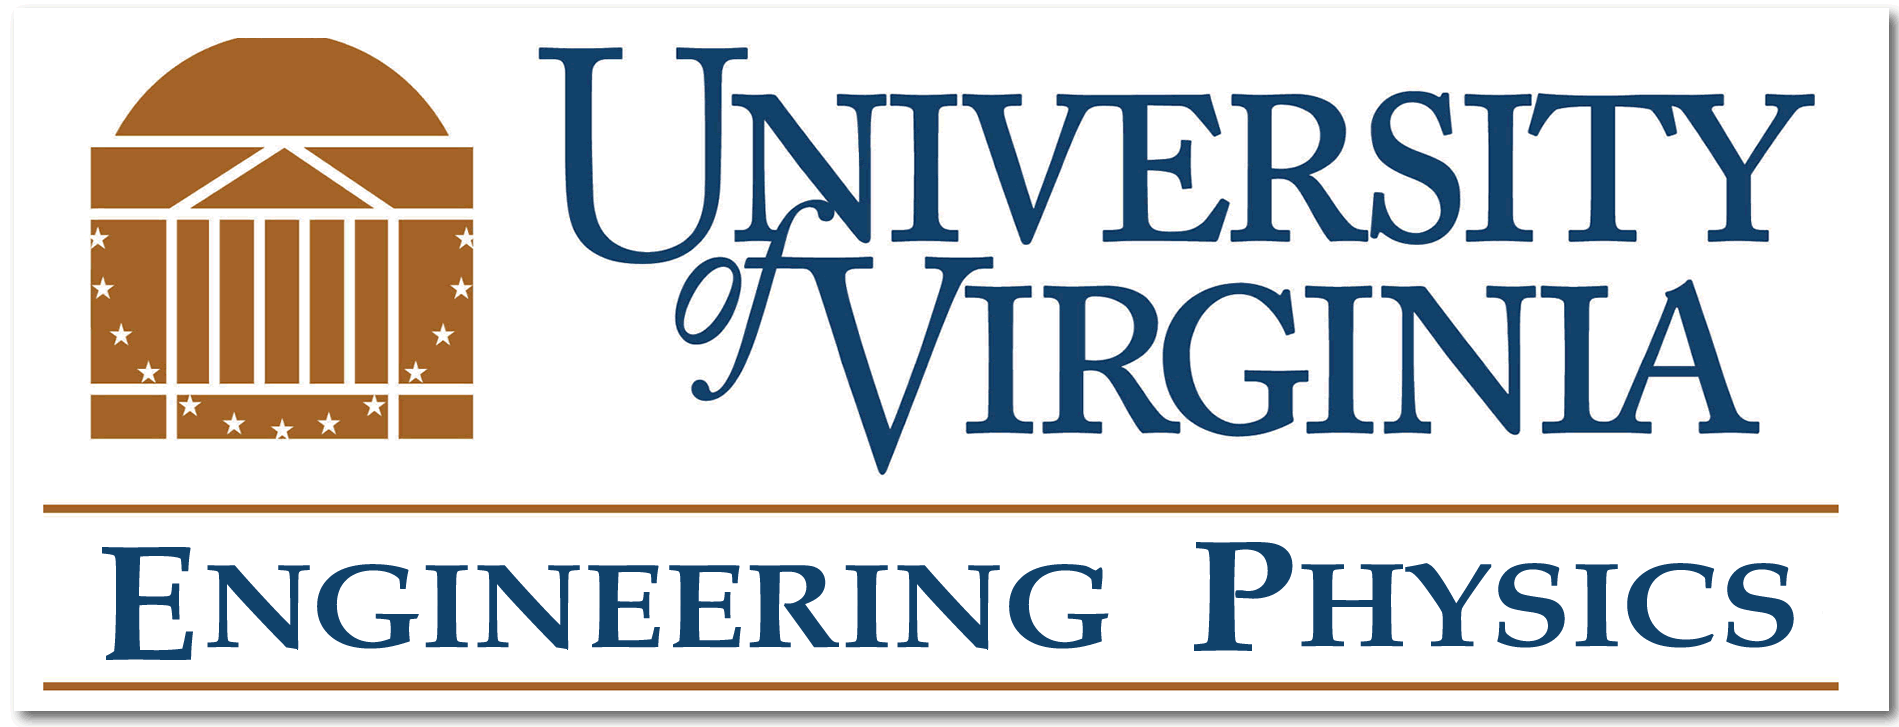 university of virginia logo 07